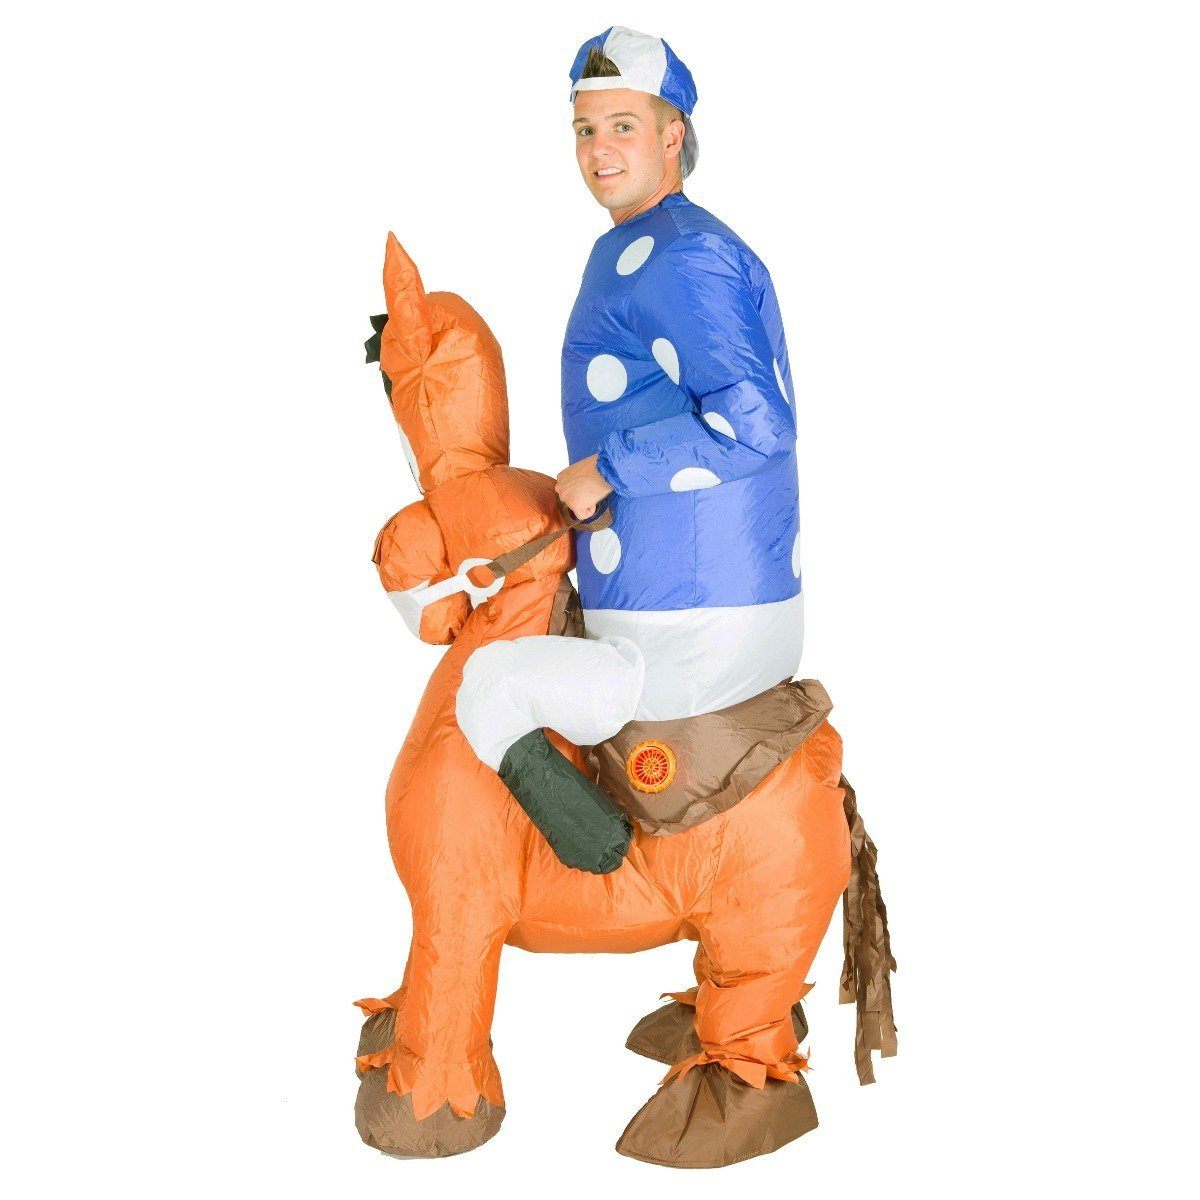 Fancy Dress - Inflatable Jockey Costume